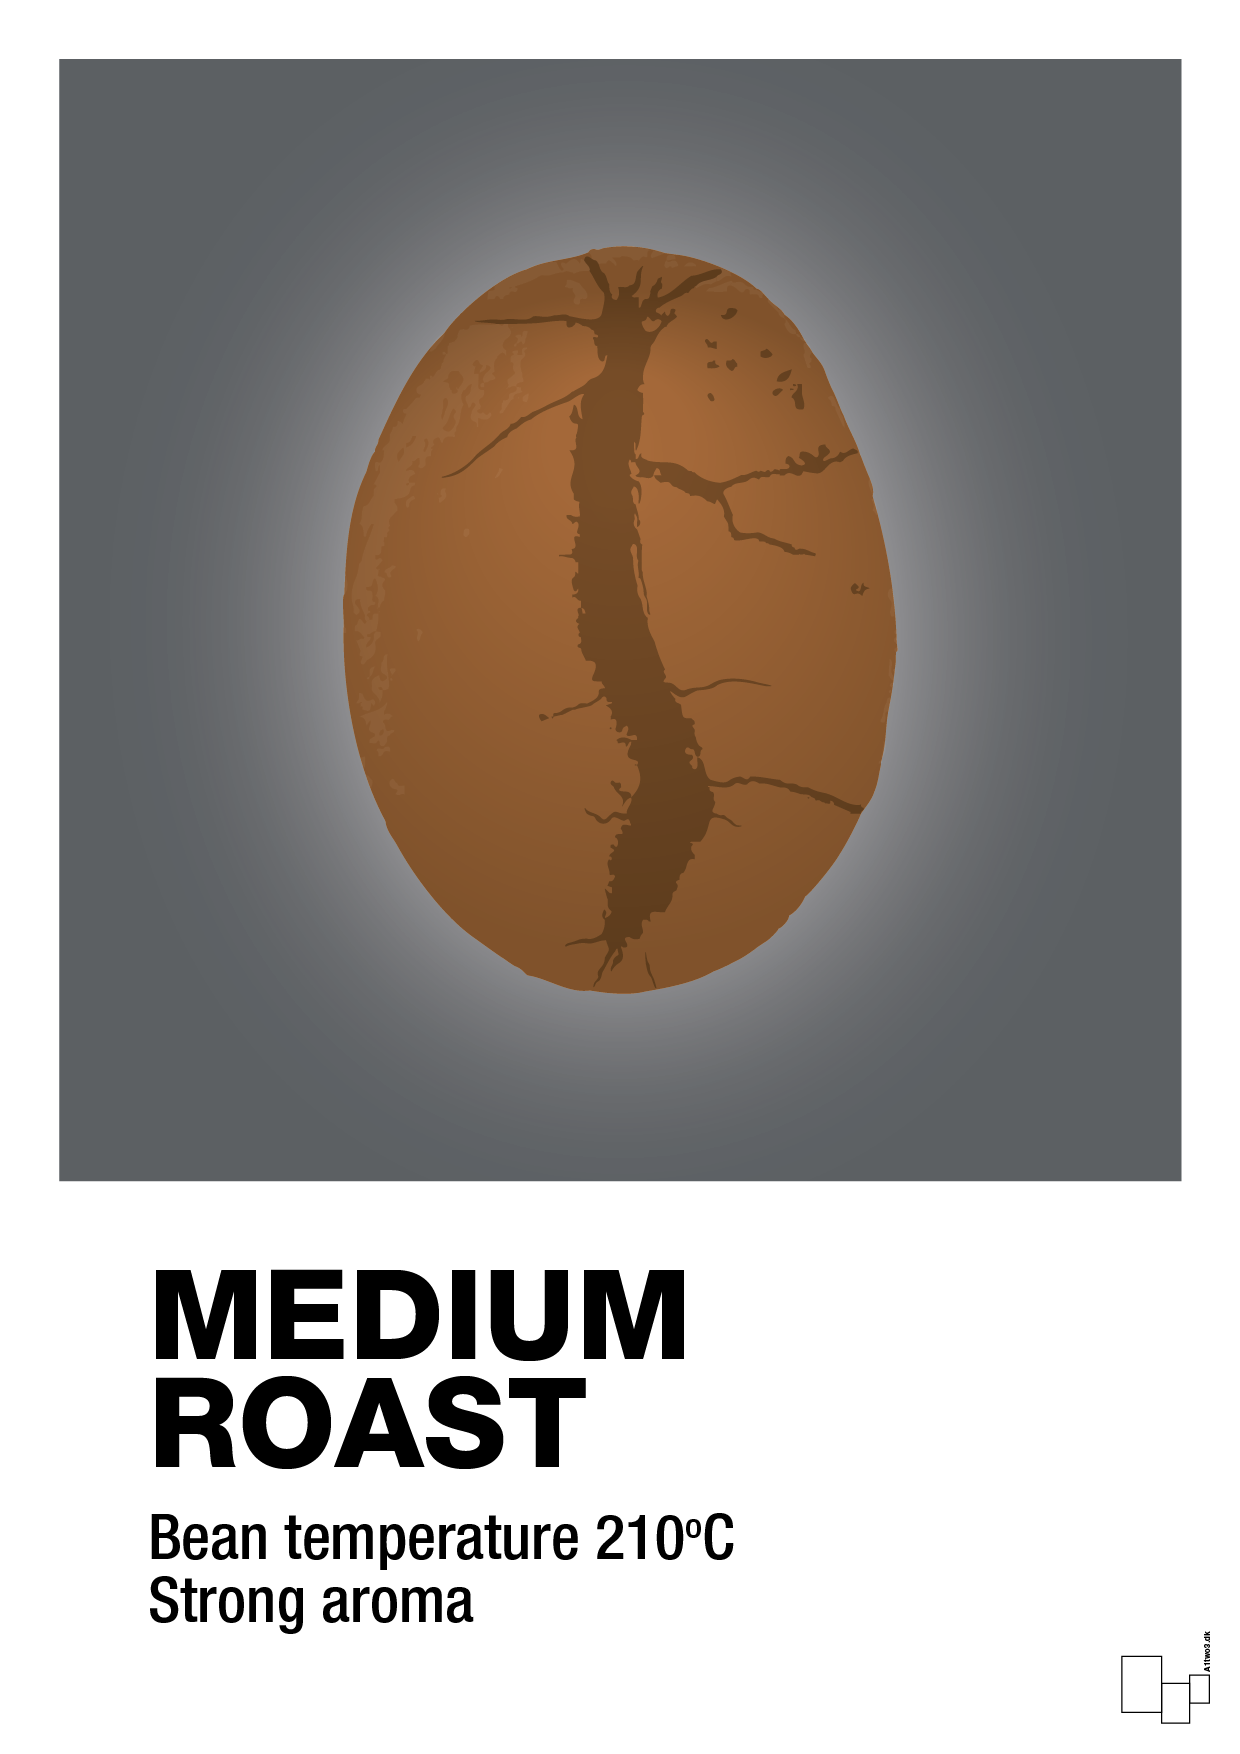 medium roast - Plakat med Mad & Drikke i Graphic Charcoal